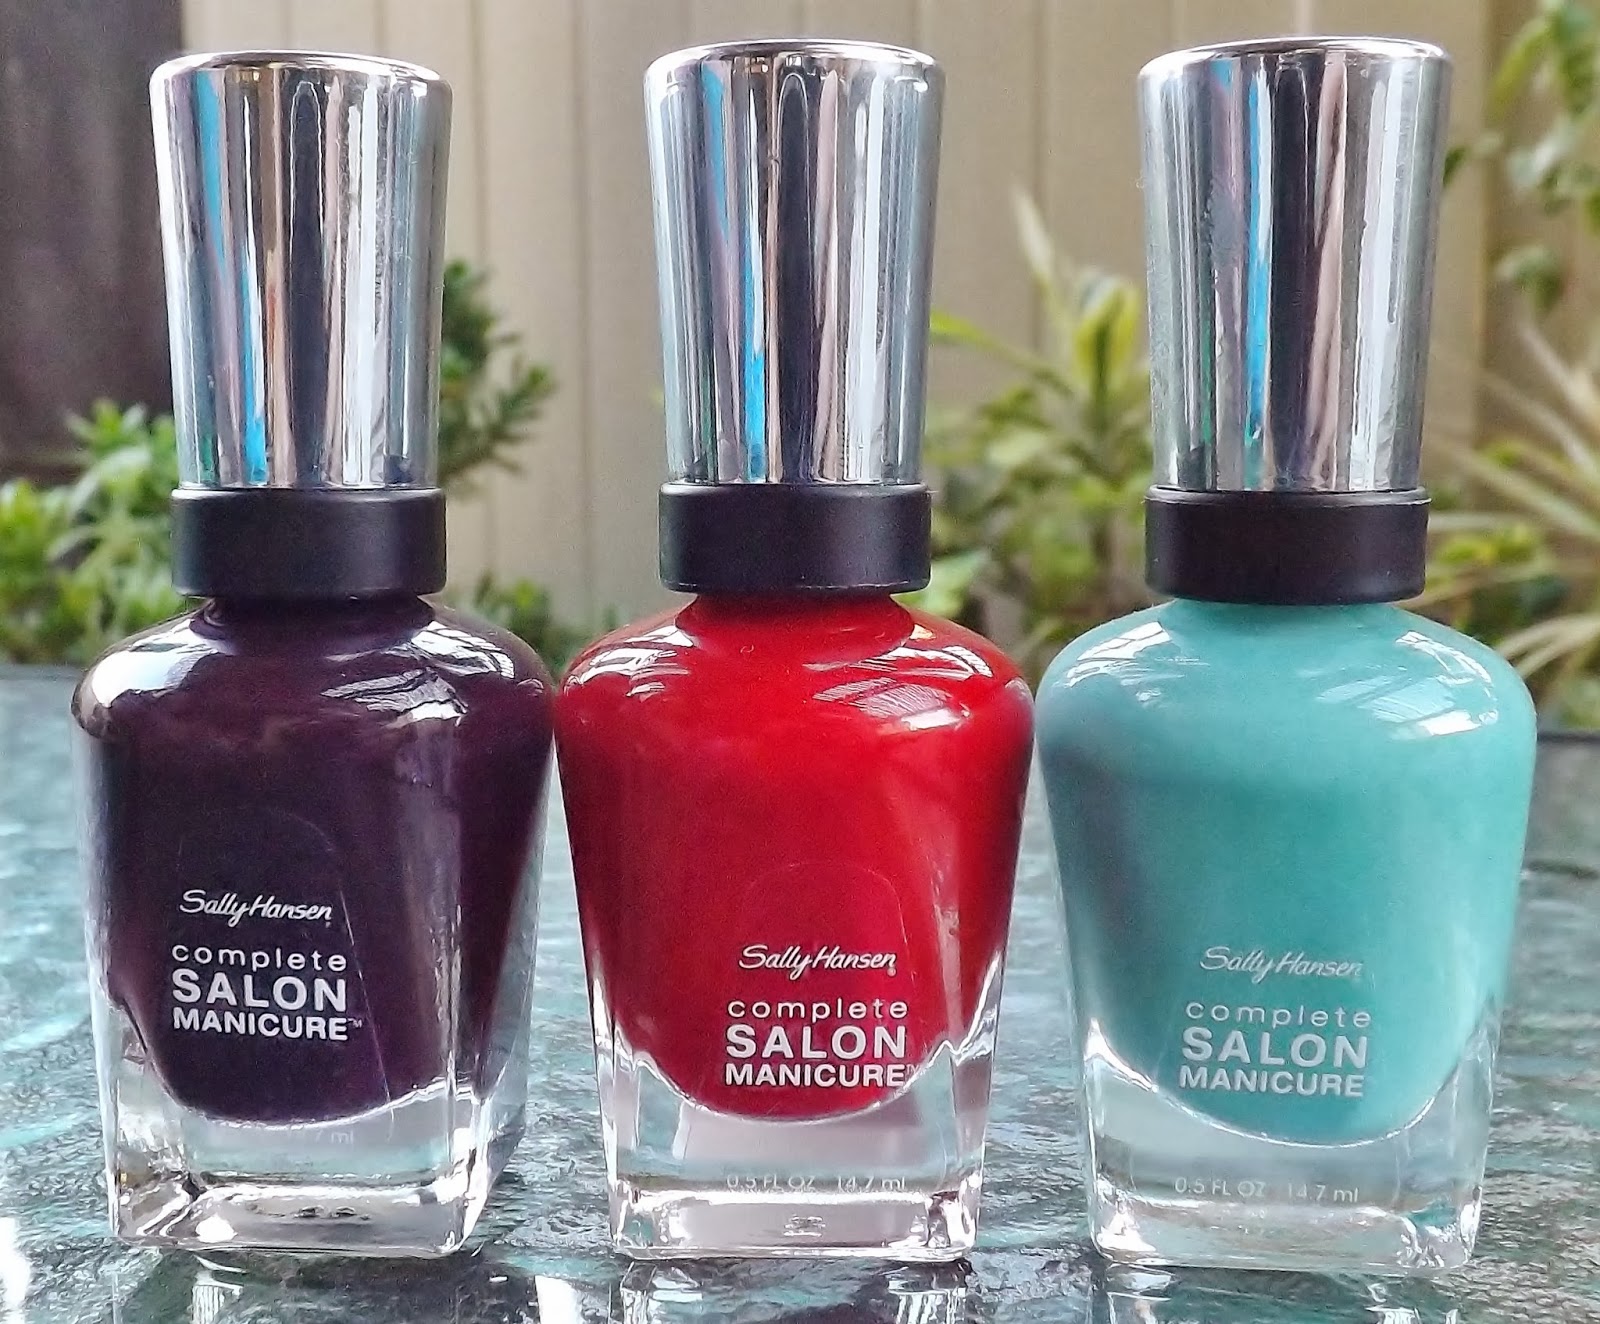 Sally Hansen Complete Salon Manicure Nail Polish - Greenlight - wide 2